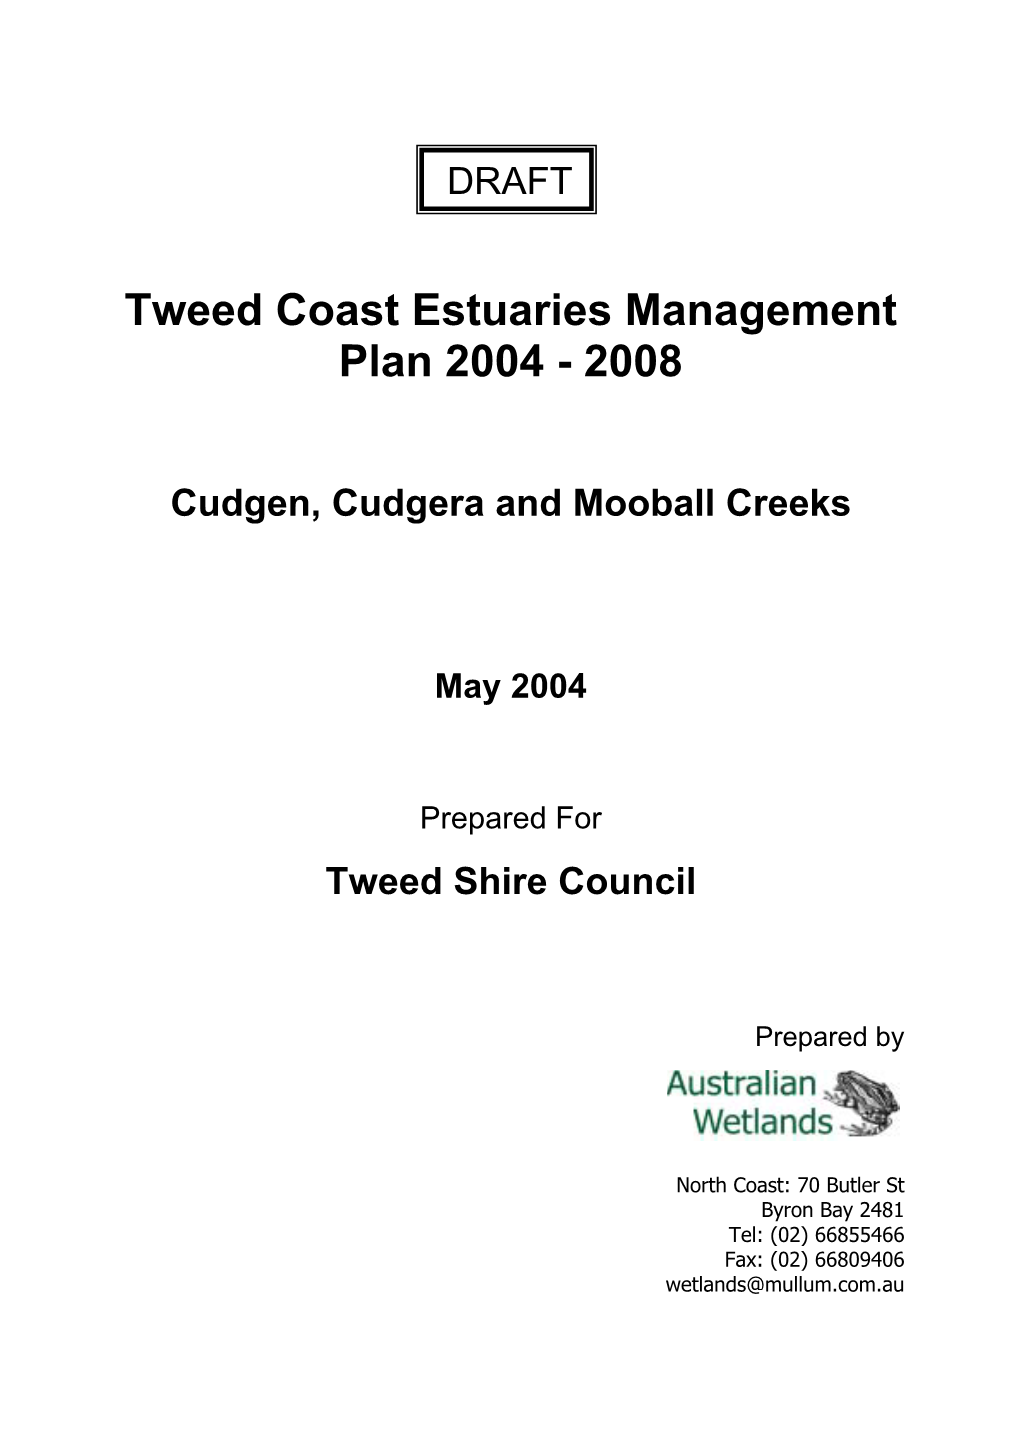 Tweed Coast Estuaries Management Plan 2004 - 2008